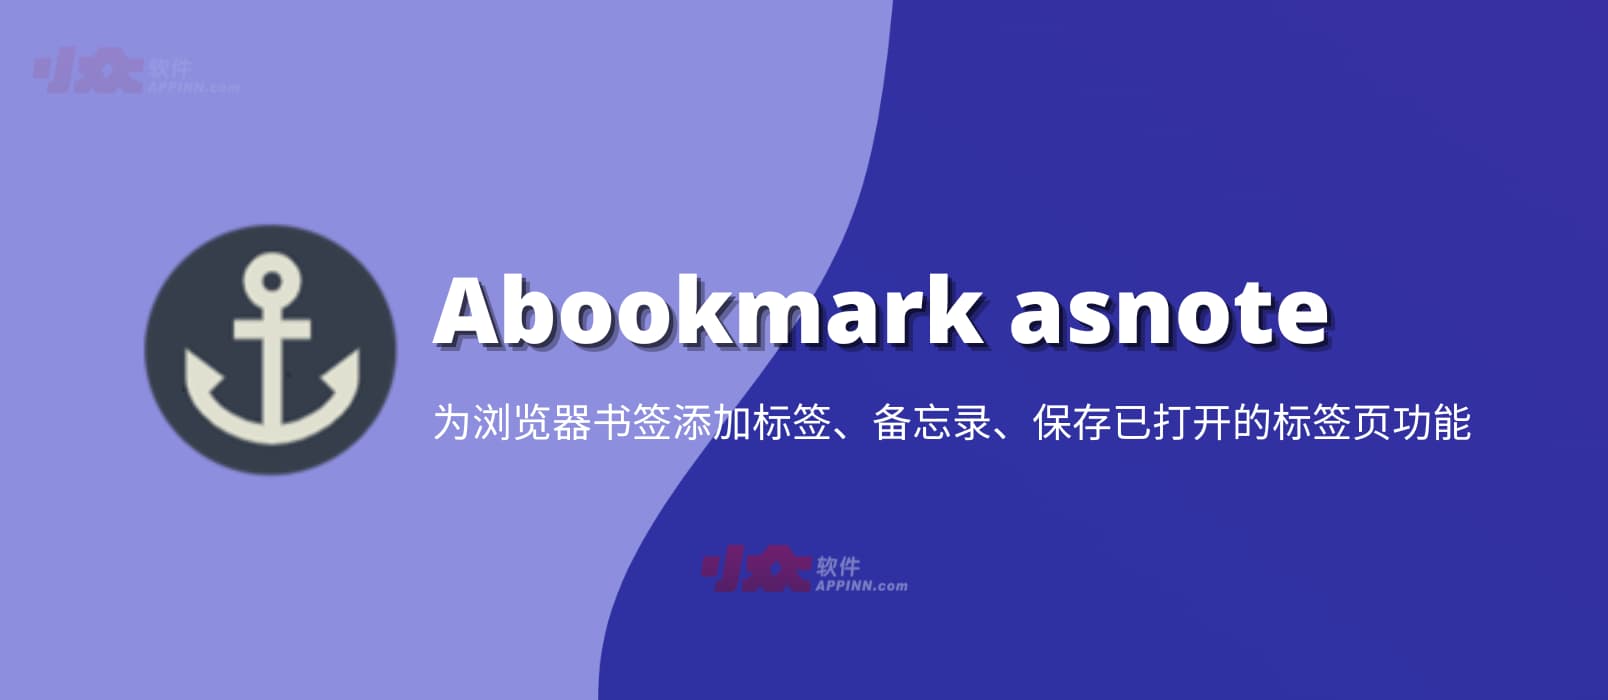 Abookmark asnote - 为浏览器书签添加标签、备忘录、保存已打开的标签页功能[Chrome]